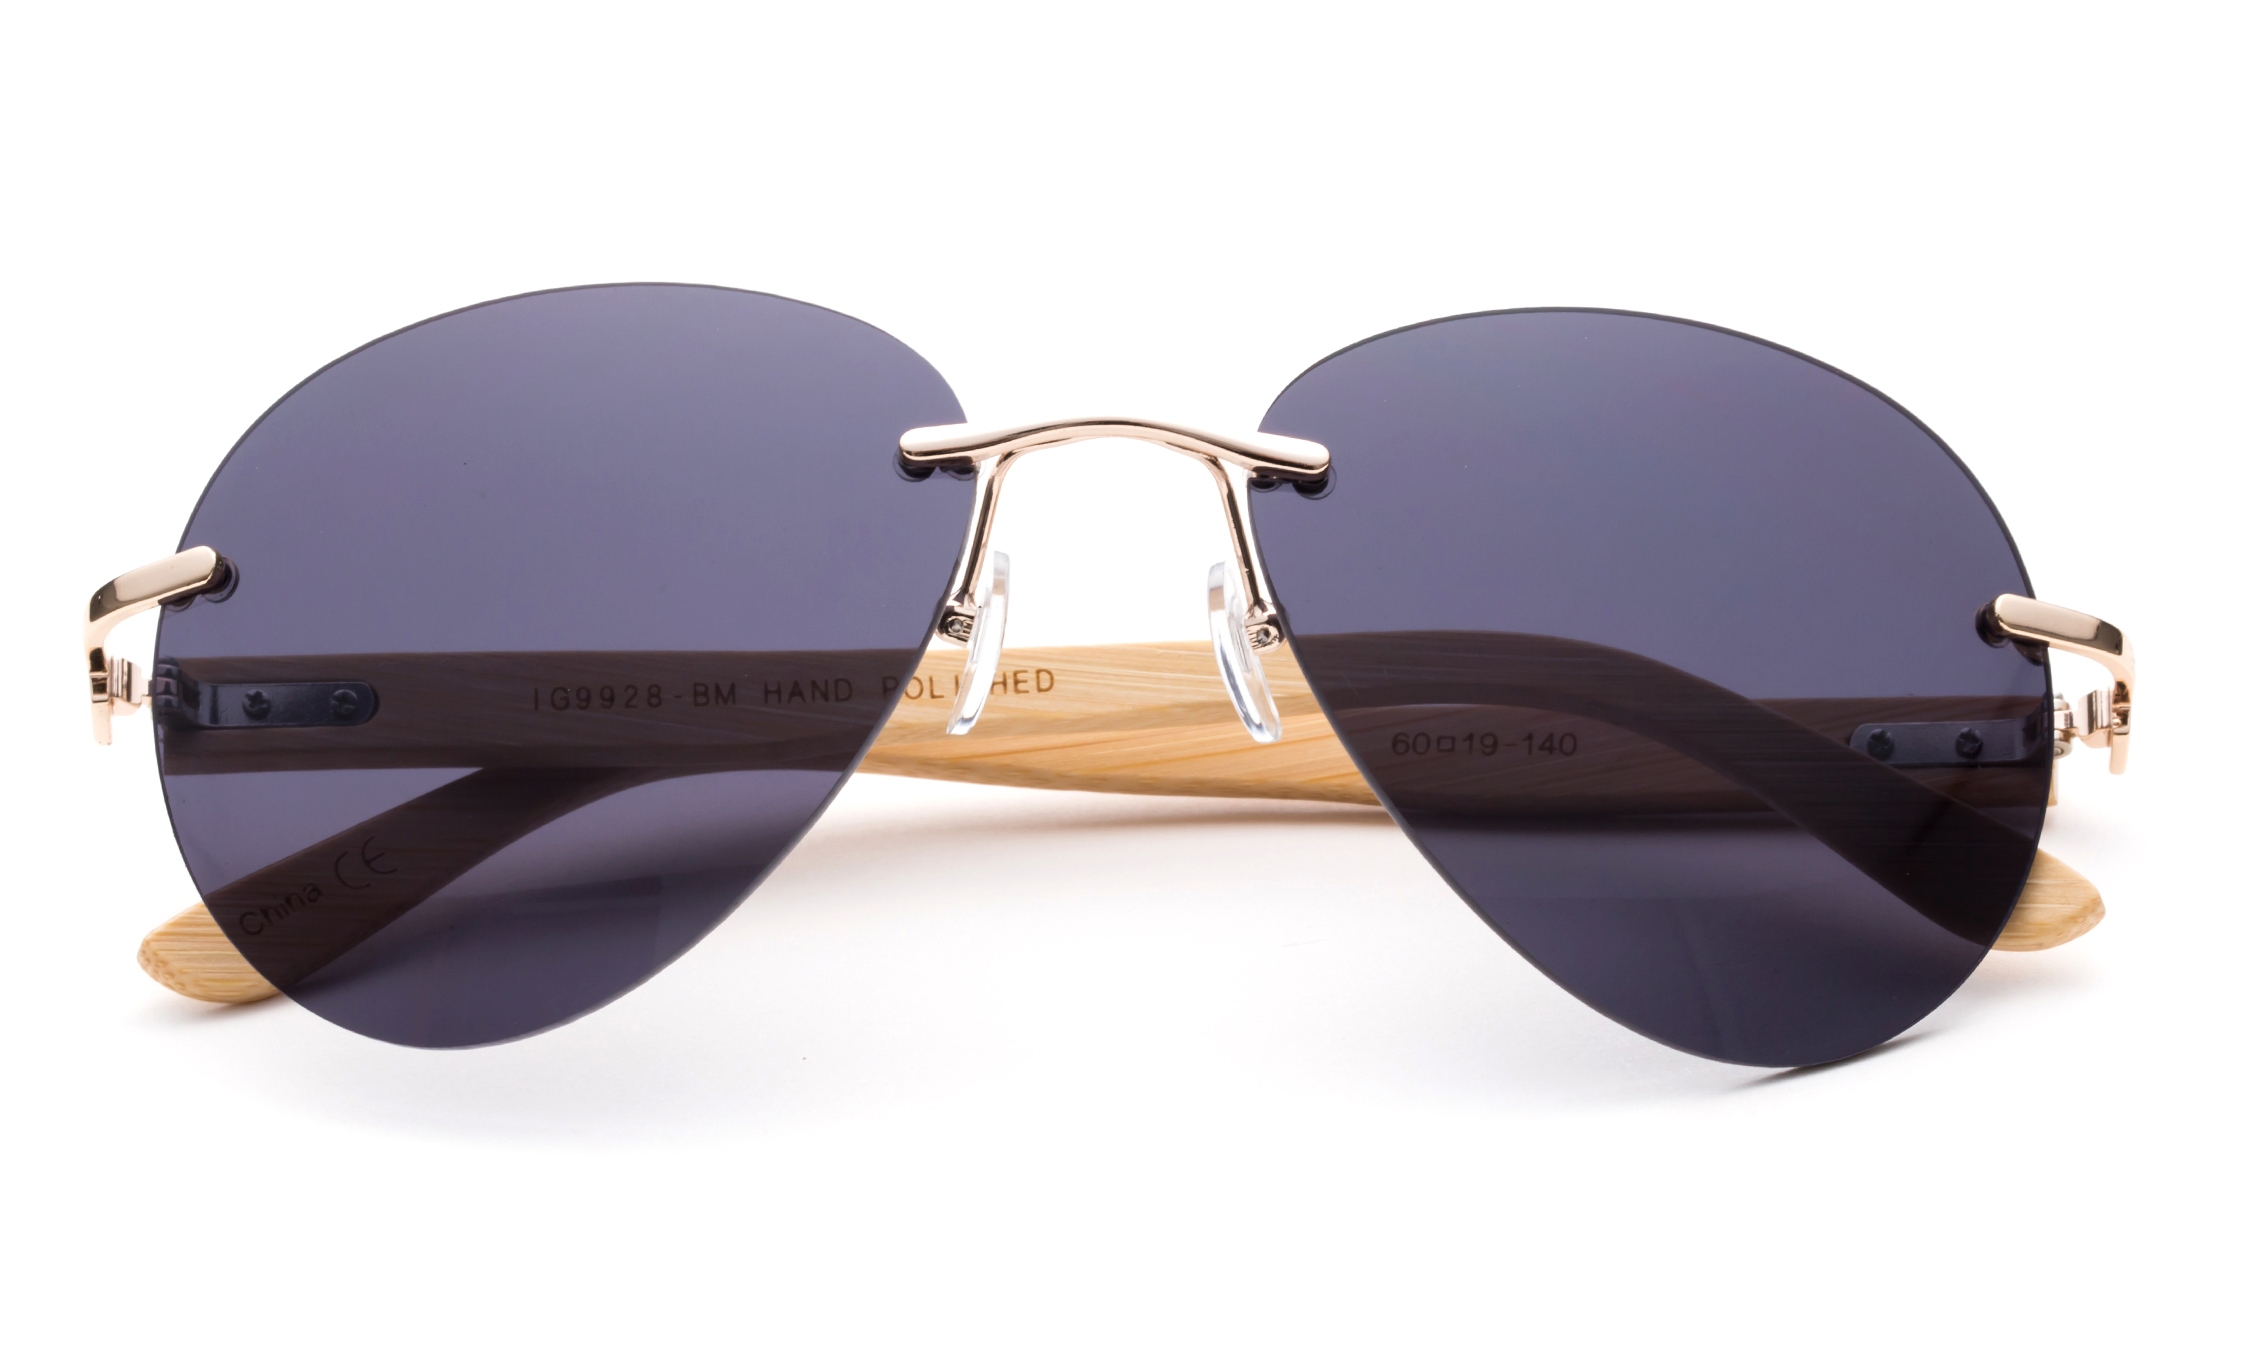 Newbee Fashion - Bamboo Arm Oversized Rimless Aviator Sunglasses with Flash Lens Bamboo Sunglasses for Men & Women - image 1 of 2